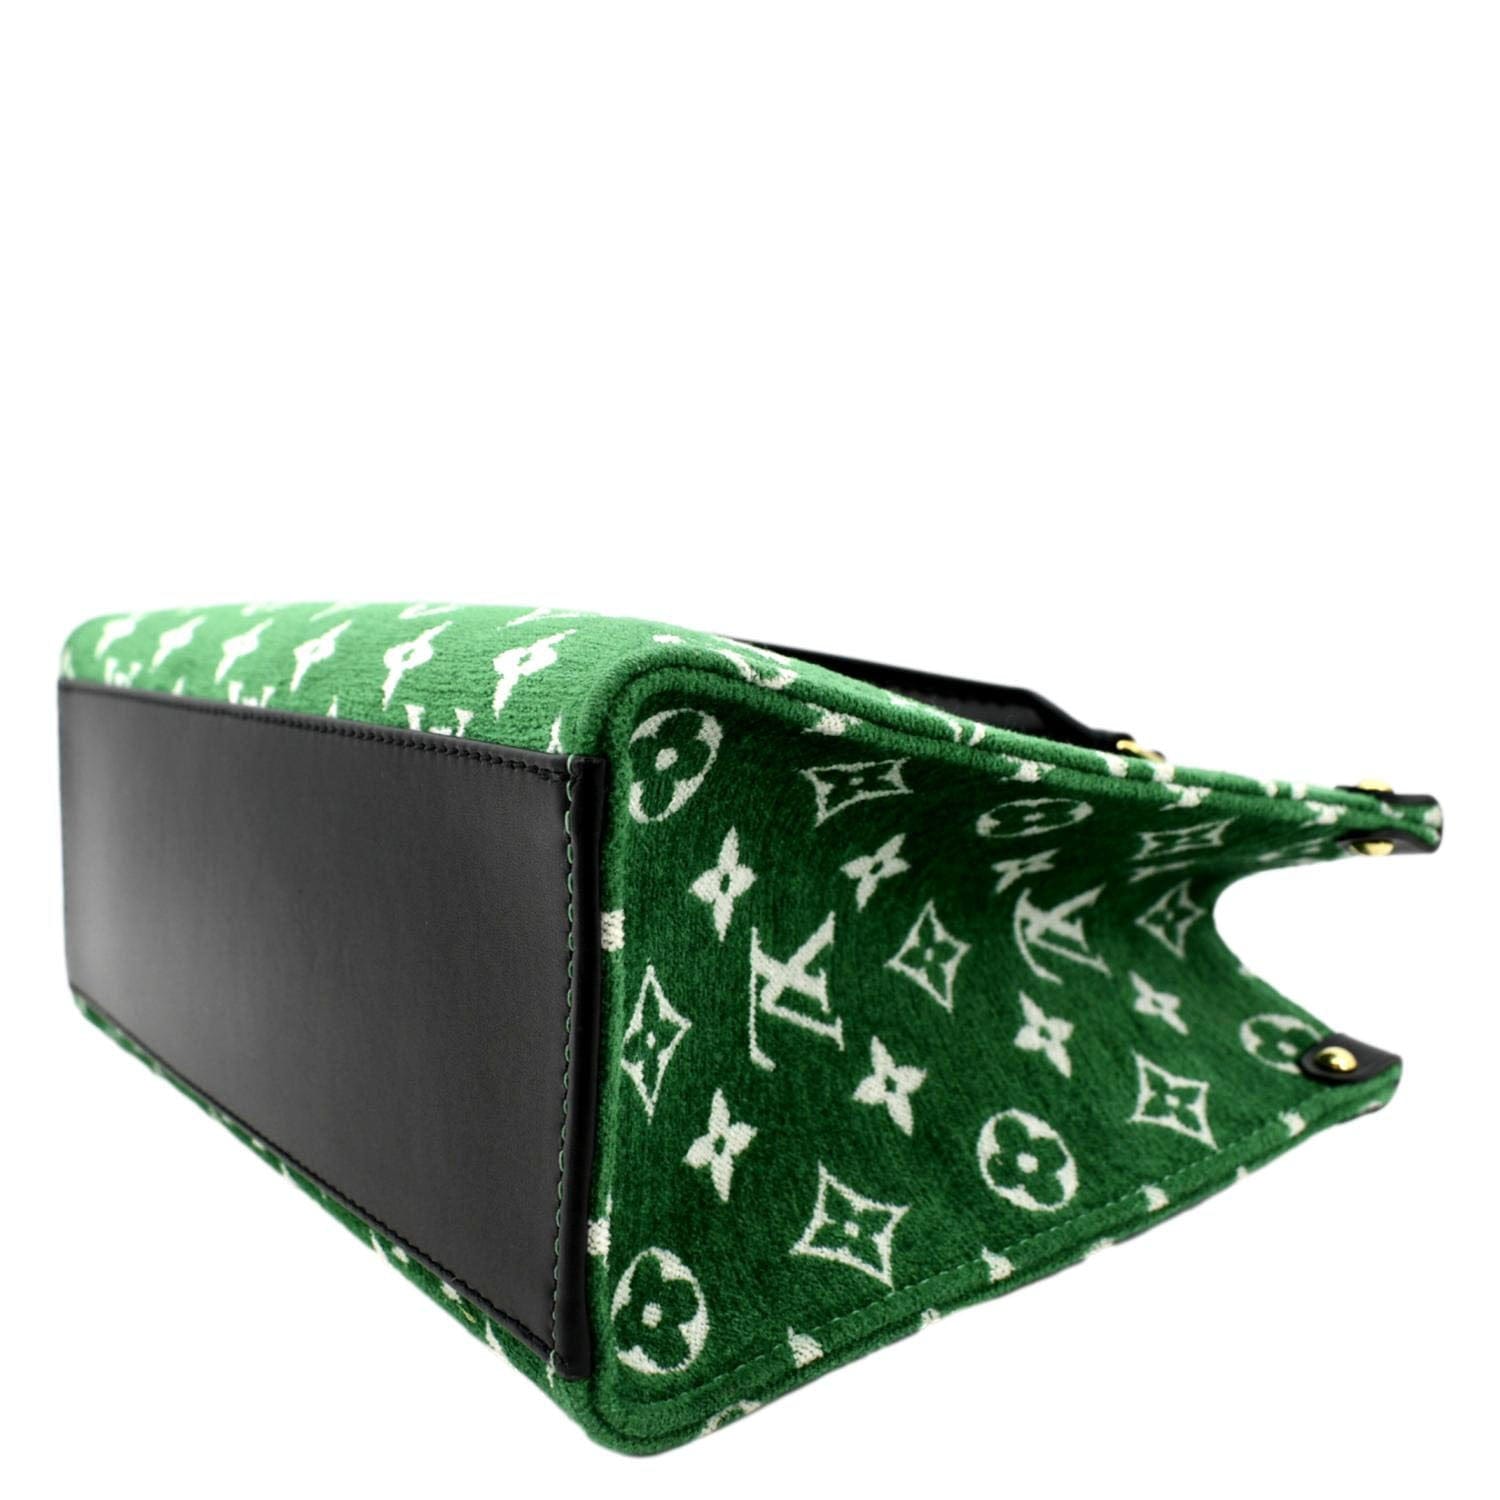 green louis vuitton bag